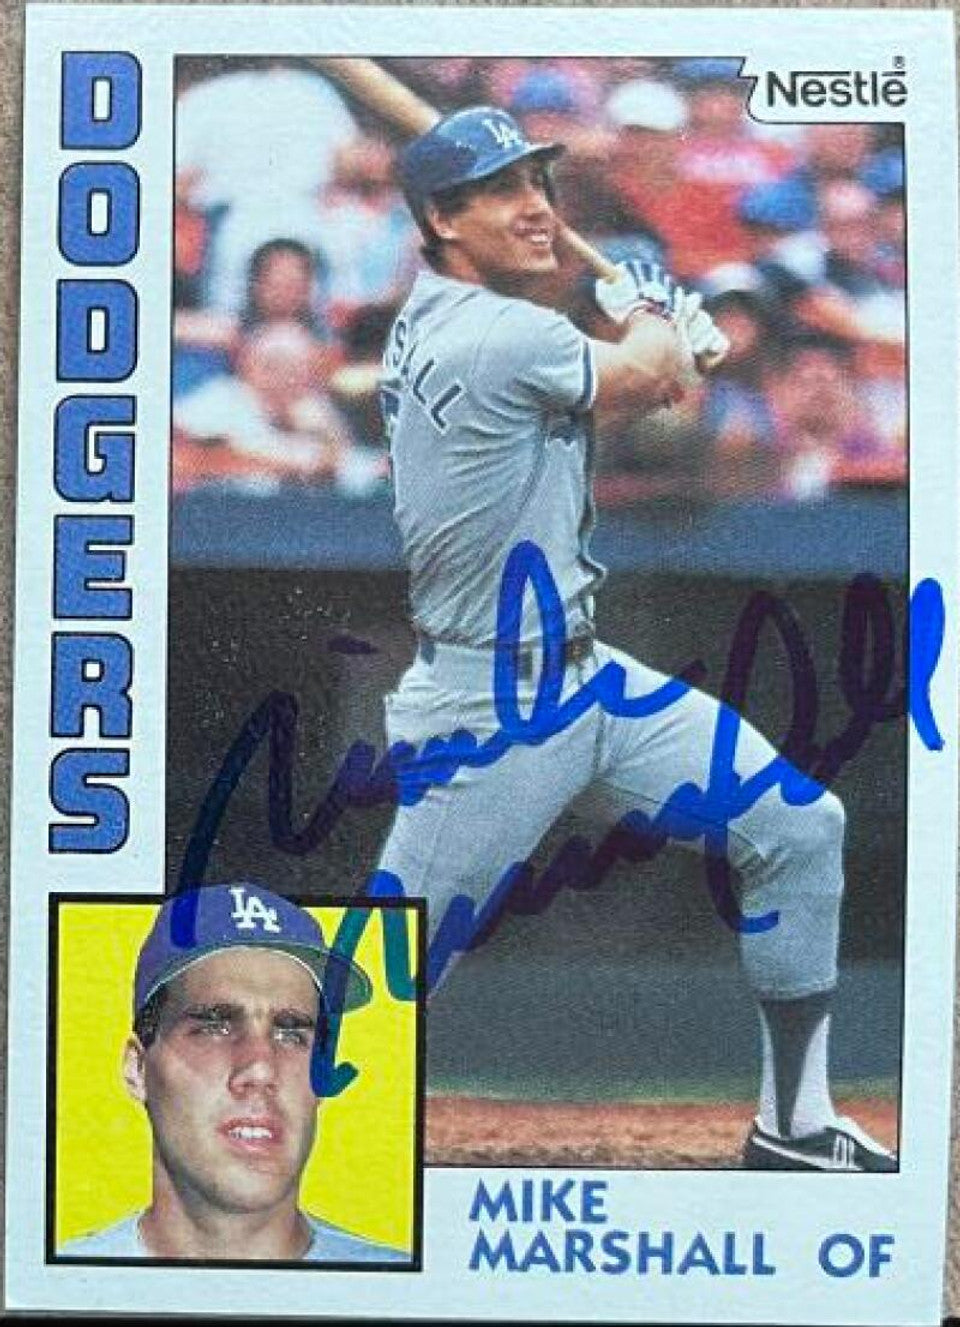 Mike Marshall Signed 1984 Nestle Baseball Card - Los Angeles Dodgers